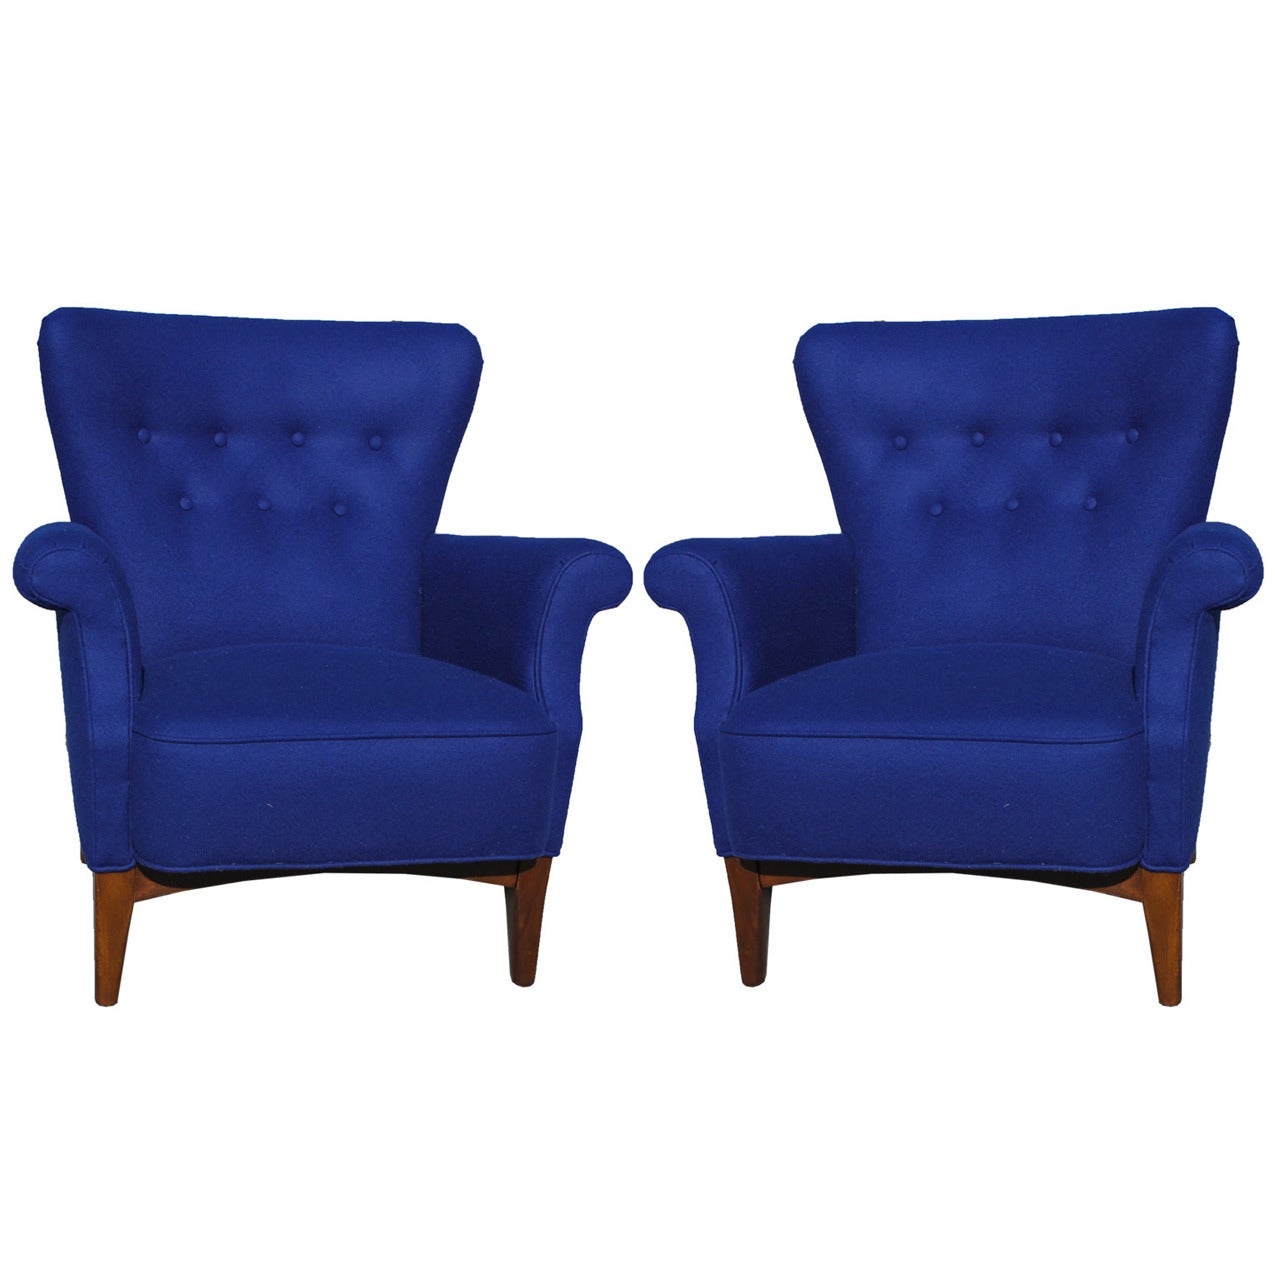 Stunning Pair of Mid Century Modern Royal Blue Danish Lounge Chairs